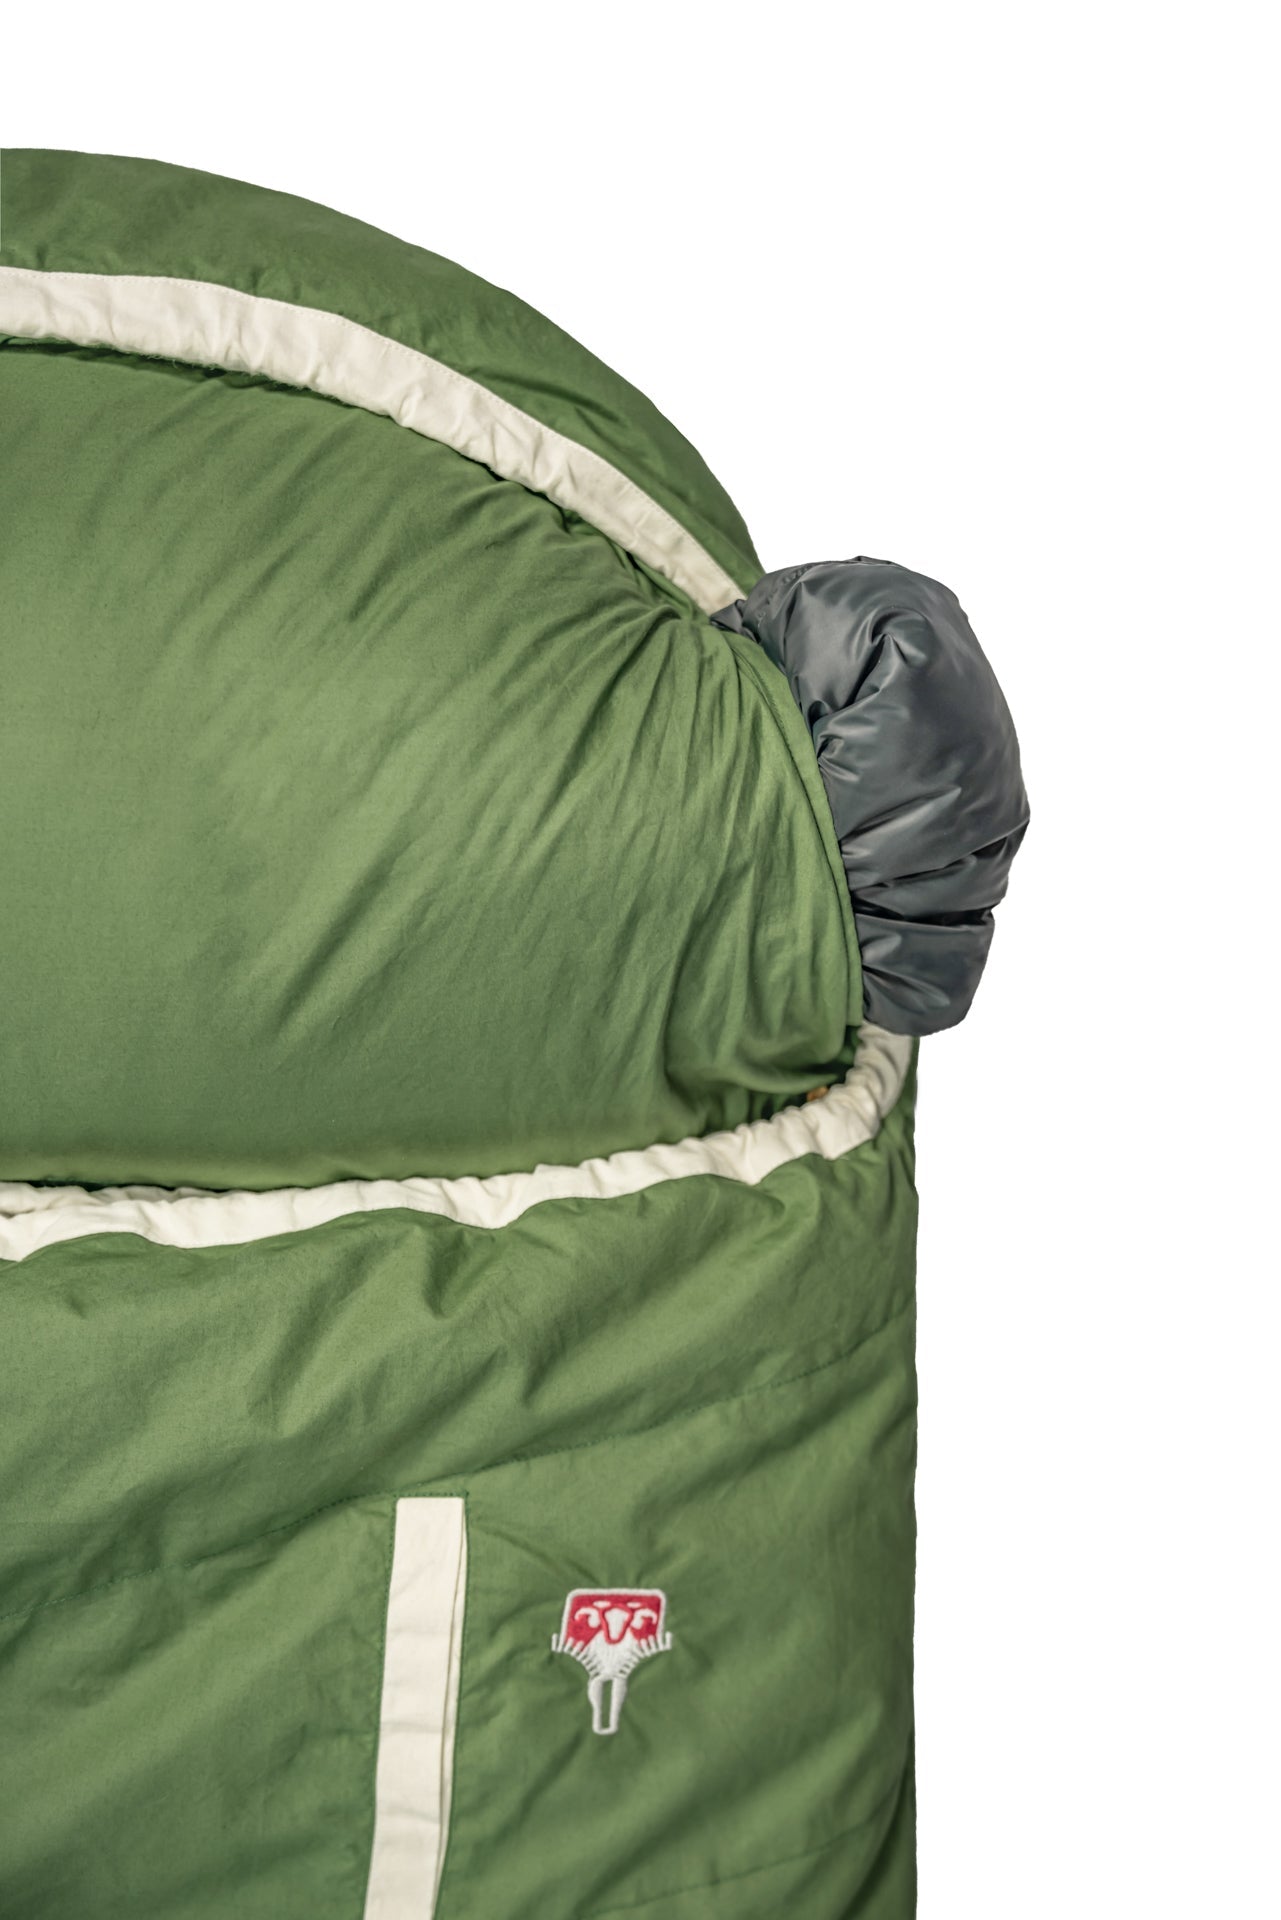 Grüezi bag Komfortschlafsack Biopod DownWool Nature Comfort - Kopfkisseneinschubfach